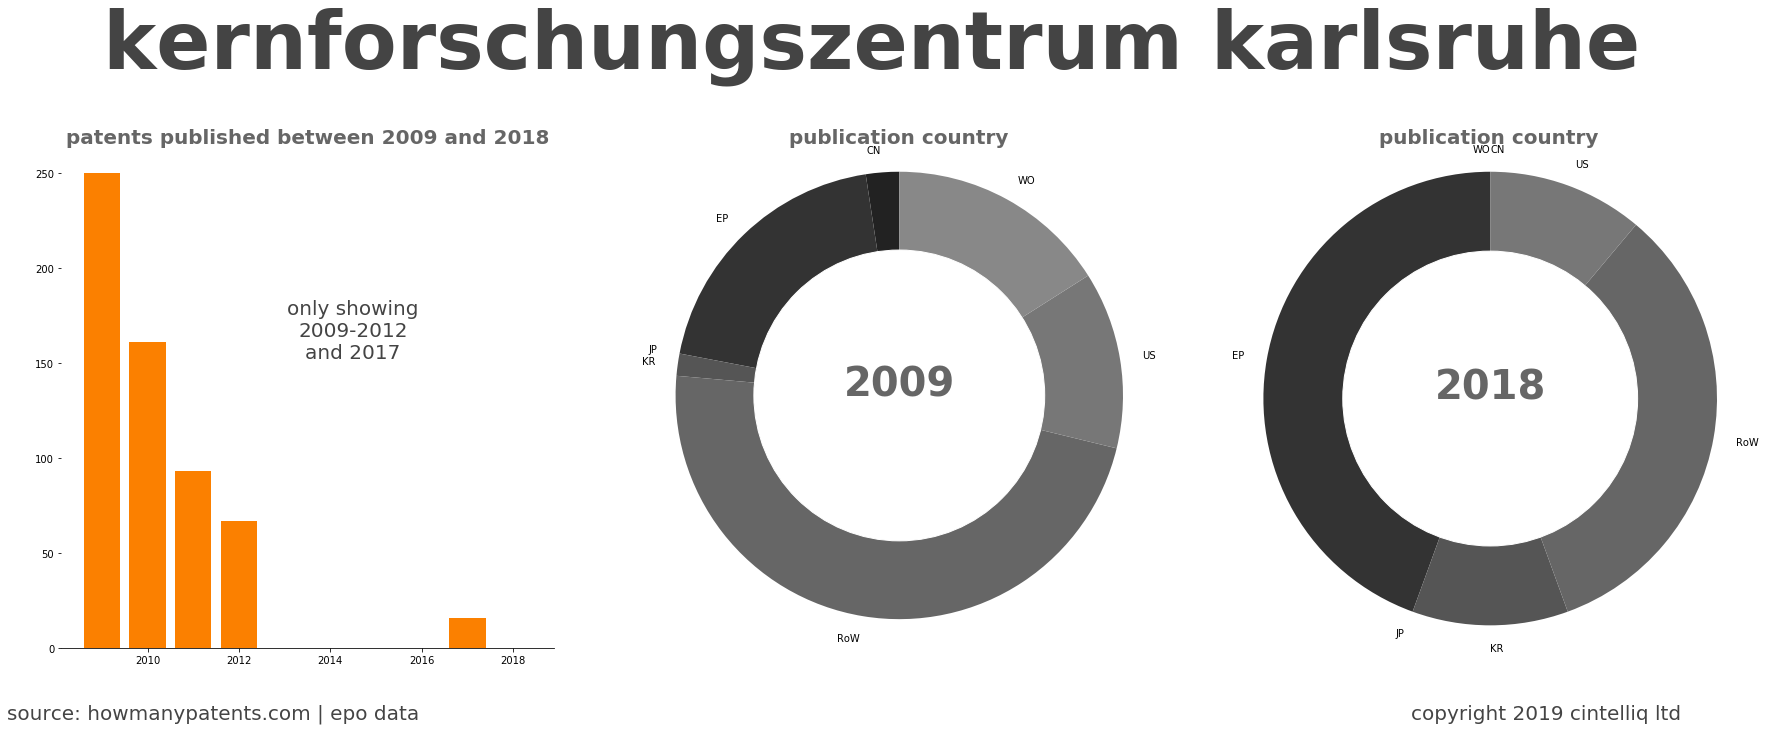 summary of patents for Kernforschungszentrum Karlsruhe